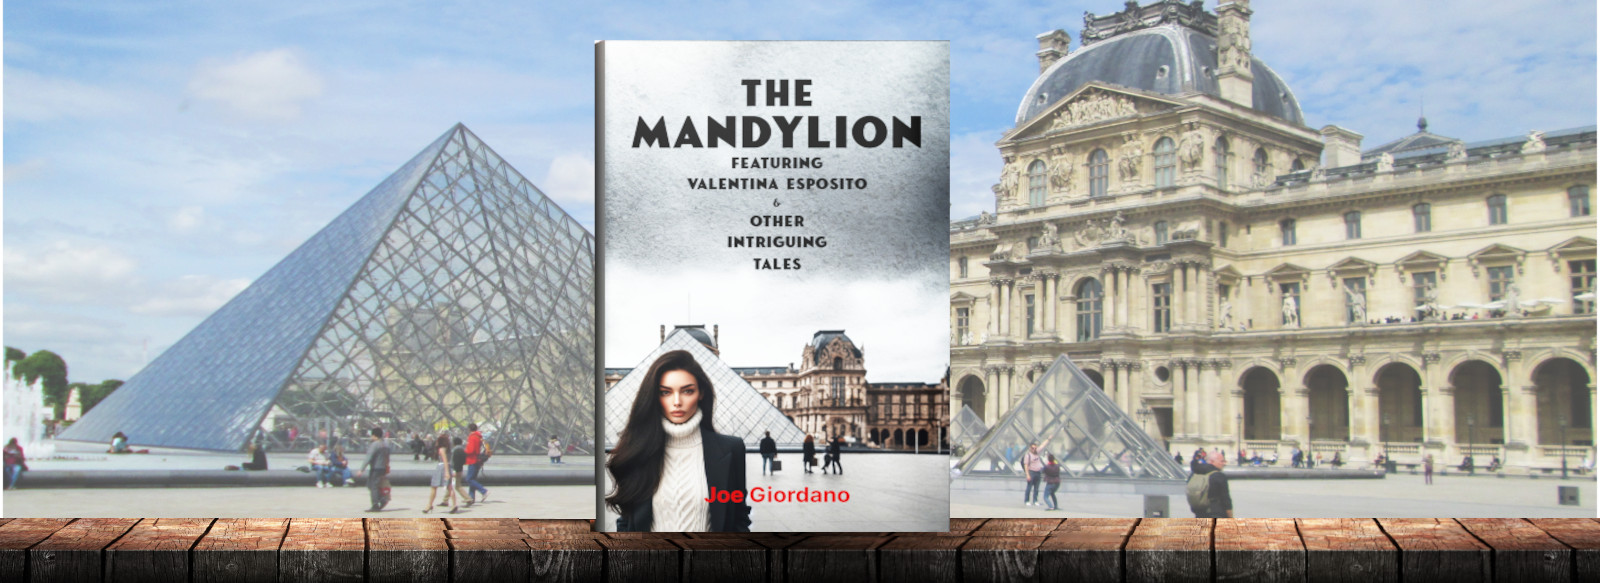 The Mandylion